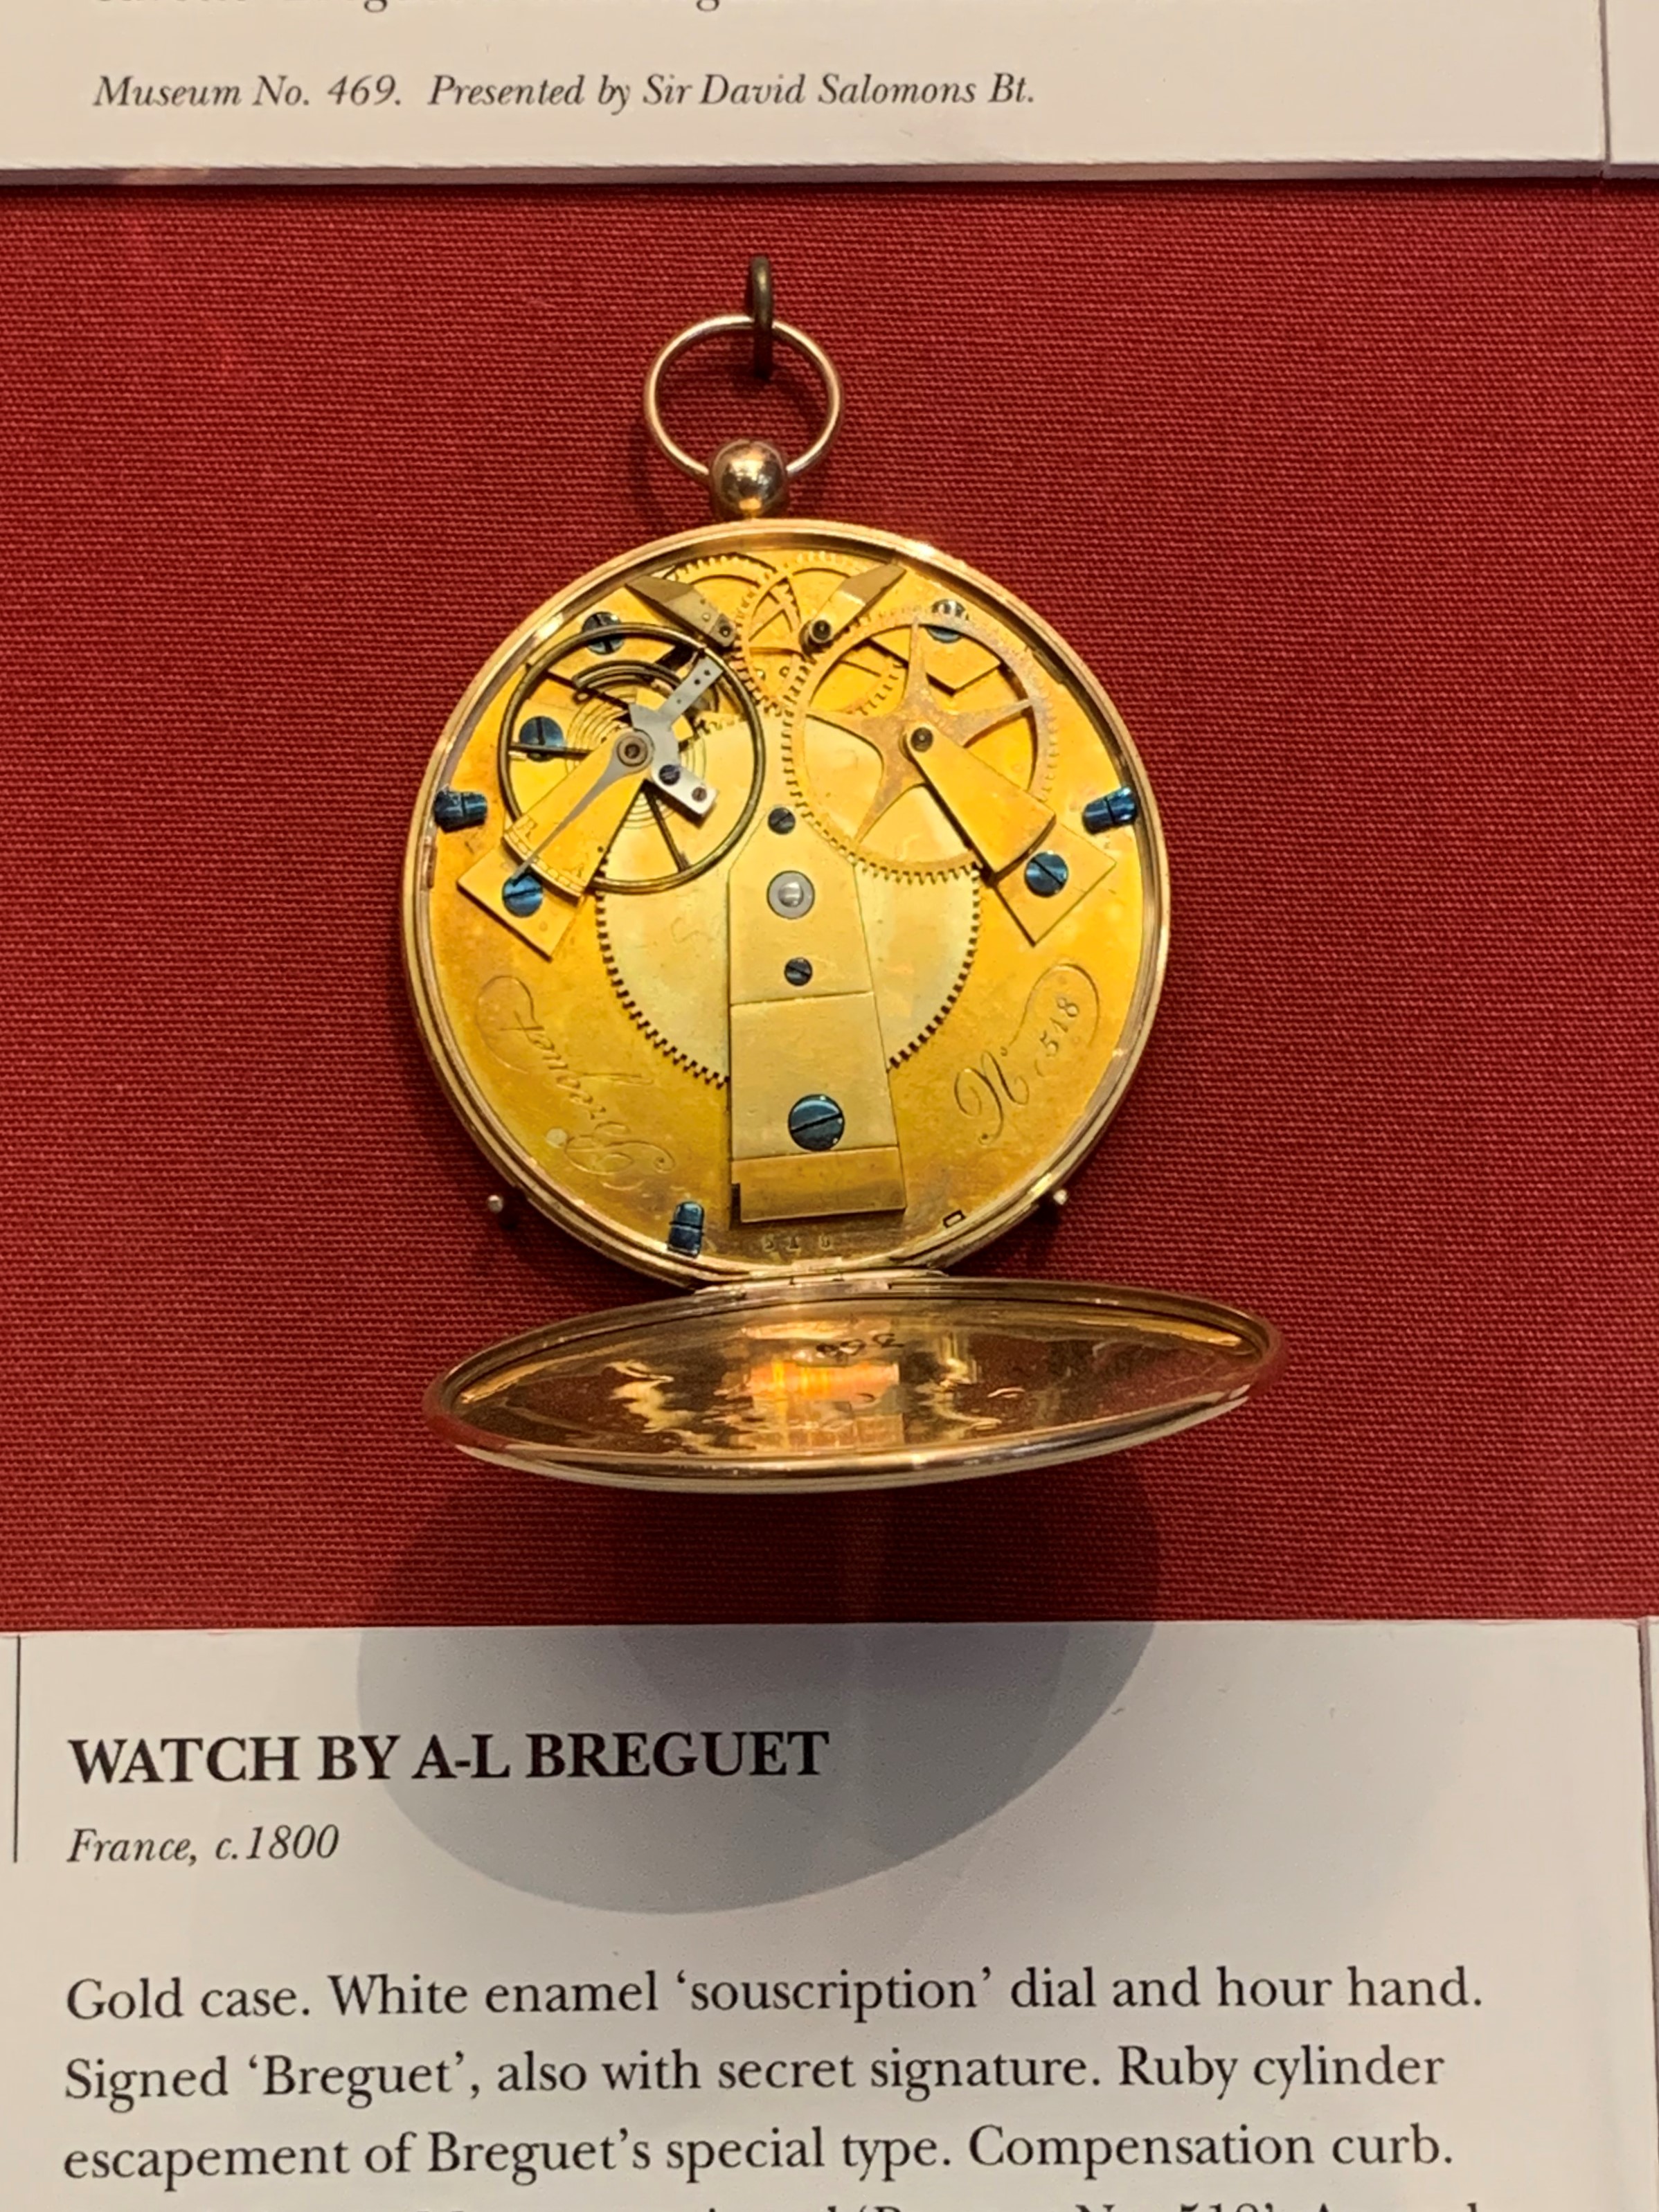 Breguet Souscription pocket watch